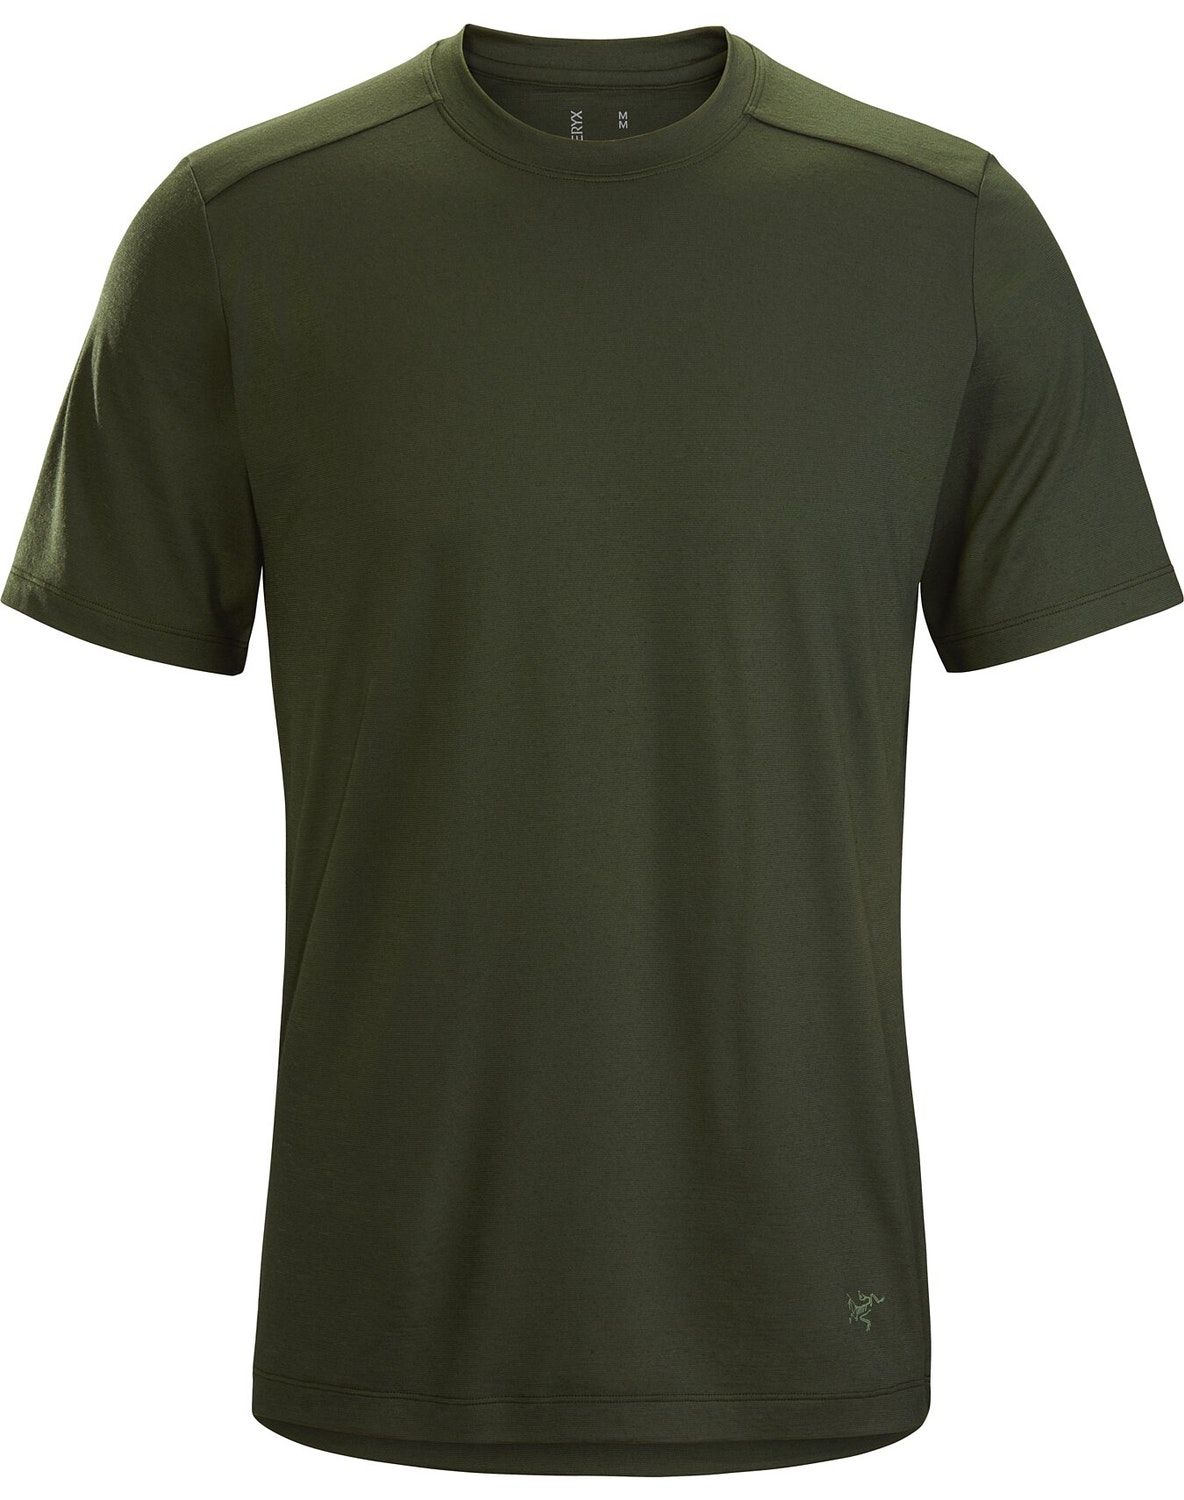 T-shirt Arc'teryx A2B Uomo Verdi Scuro - IT-753165